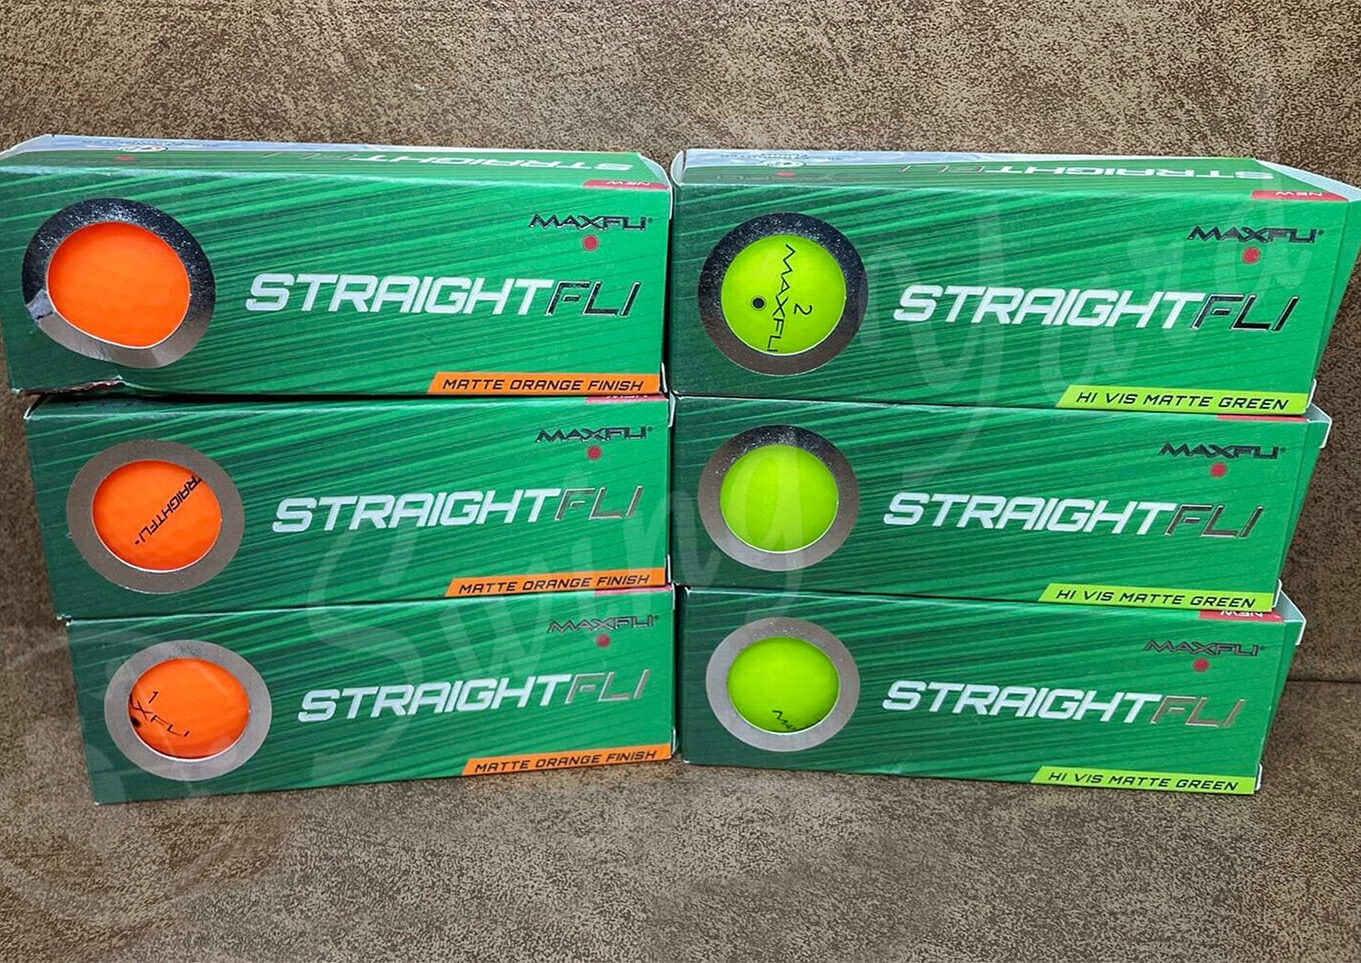 The matte orange and matte green Maxfli StraightFli balls